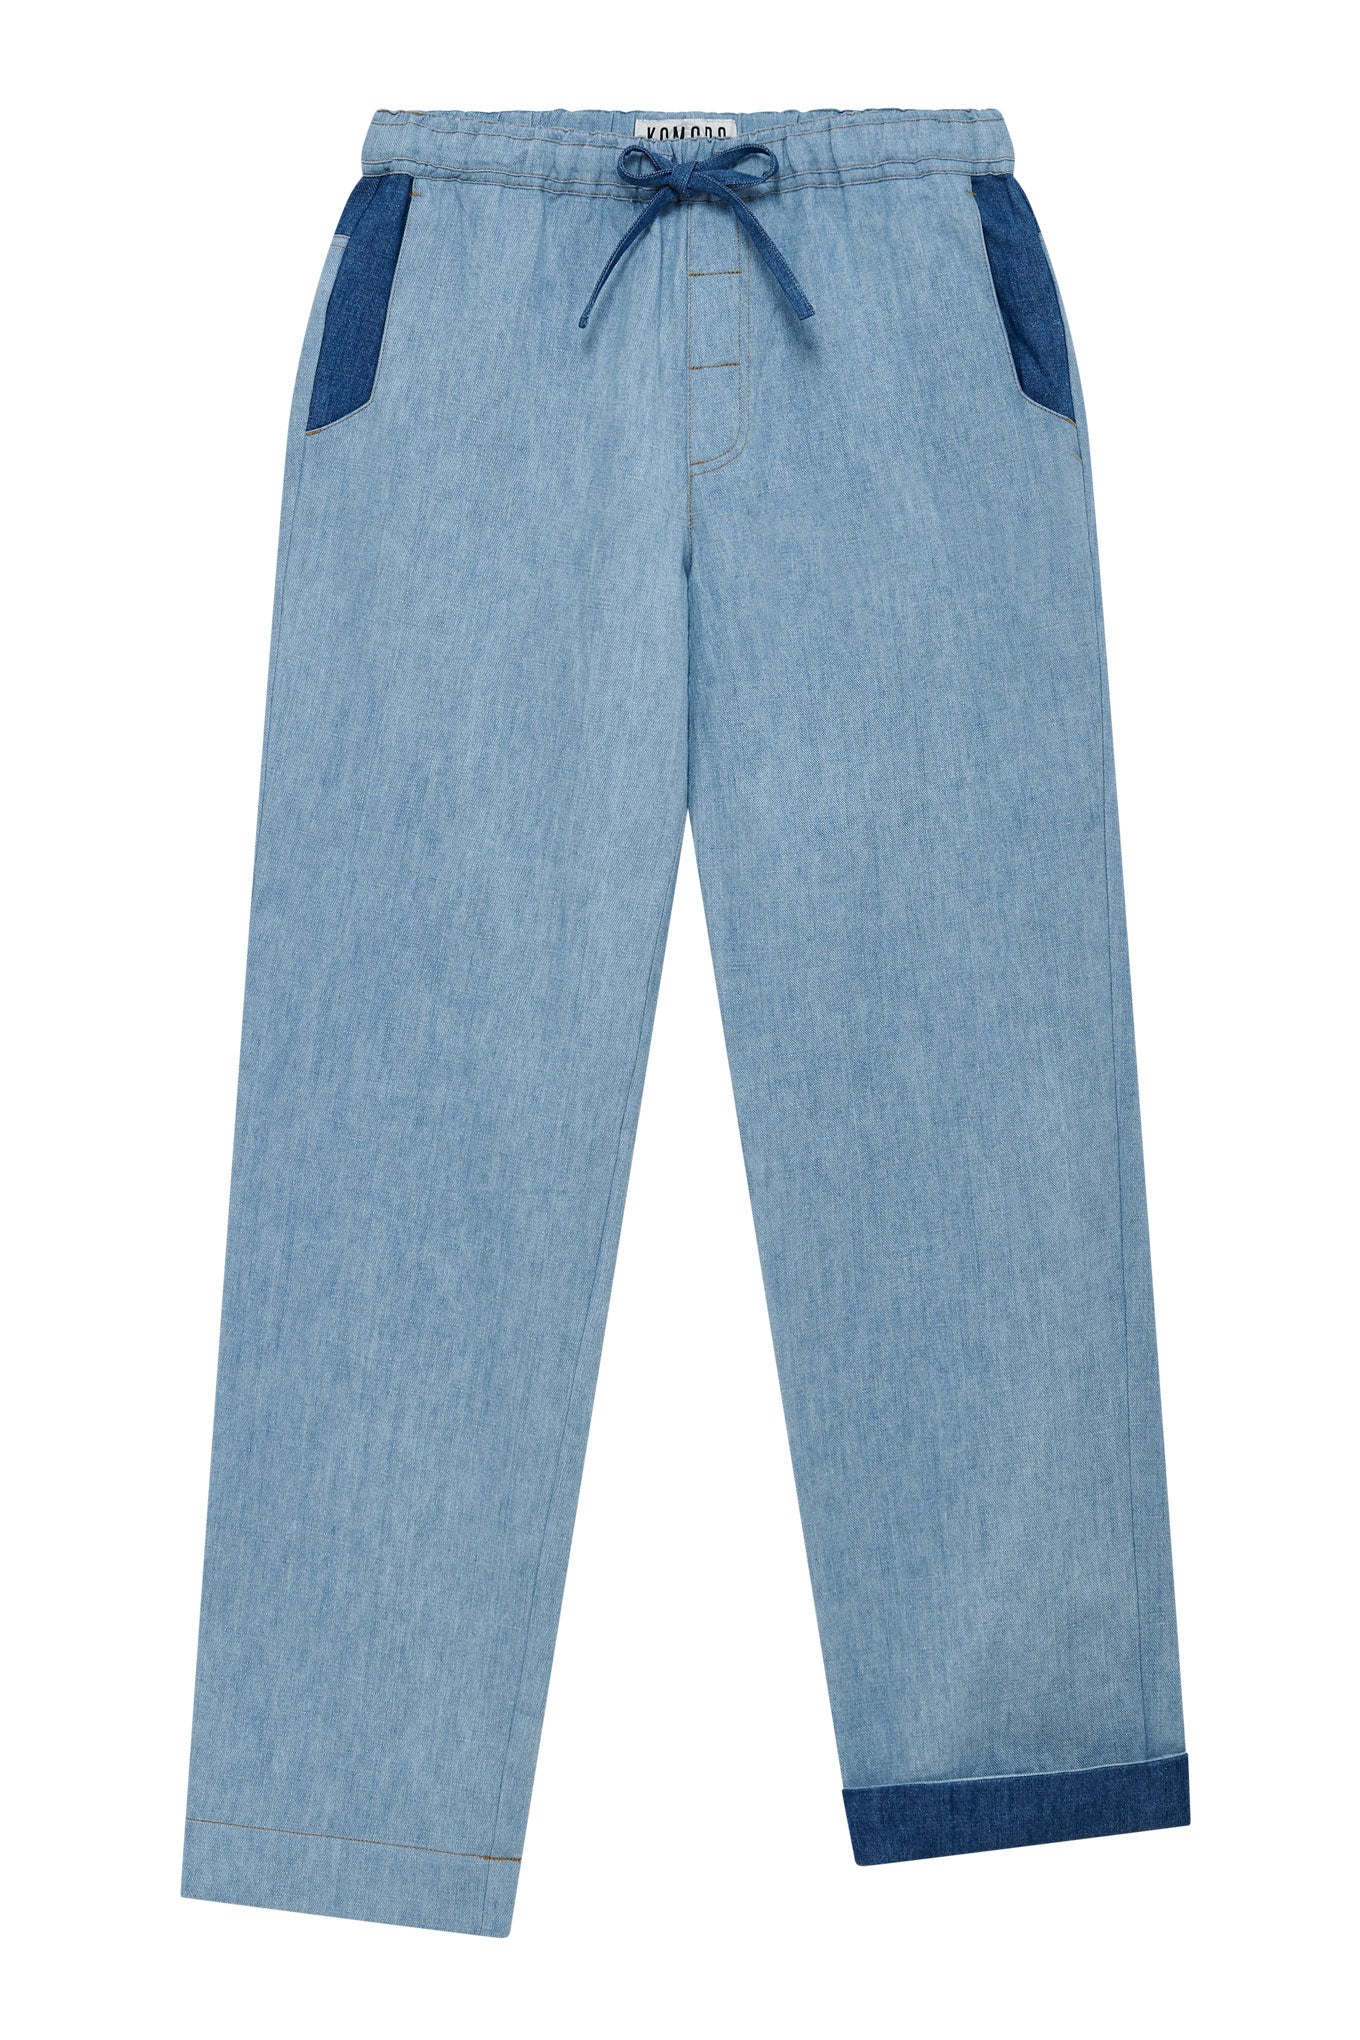 Komodo Men's Joshua - Linen Trouser Mid Patchwork Blue